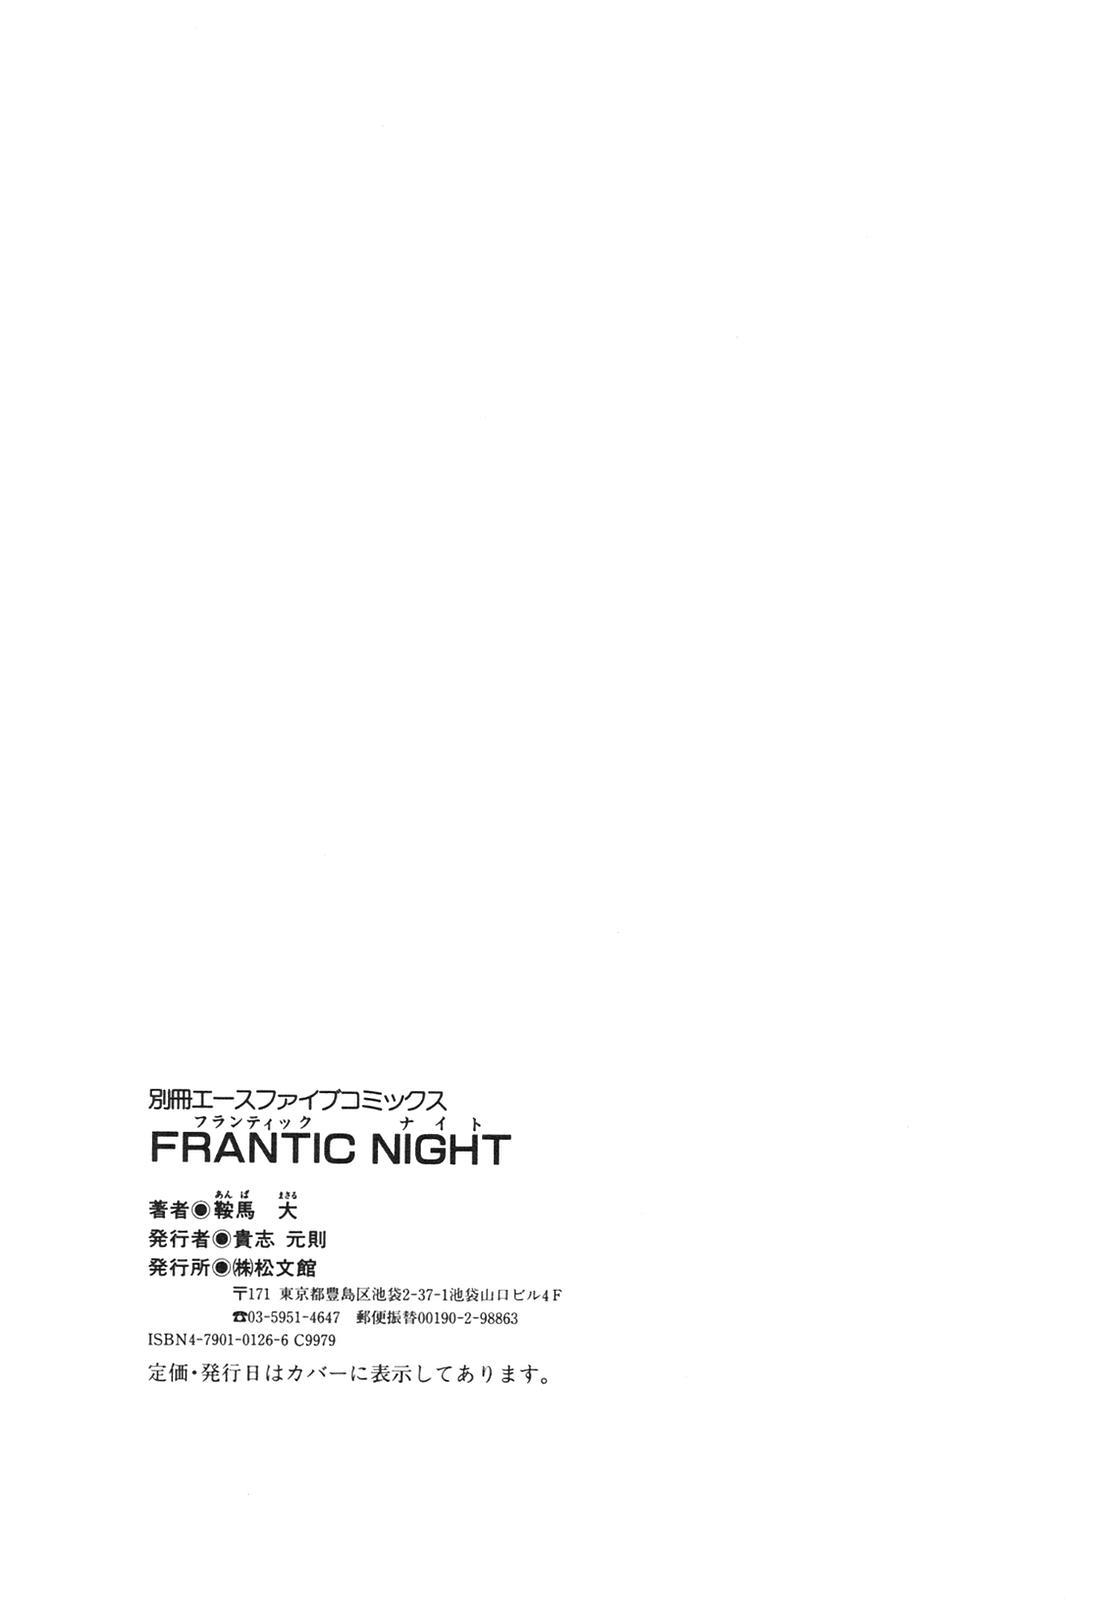 Frantic Night 159